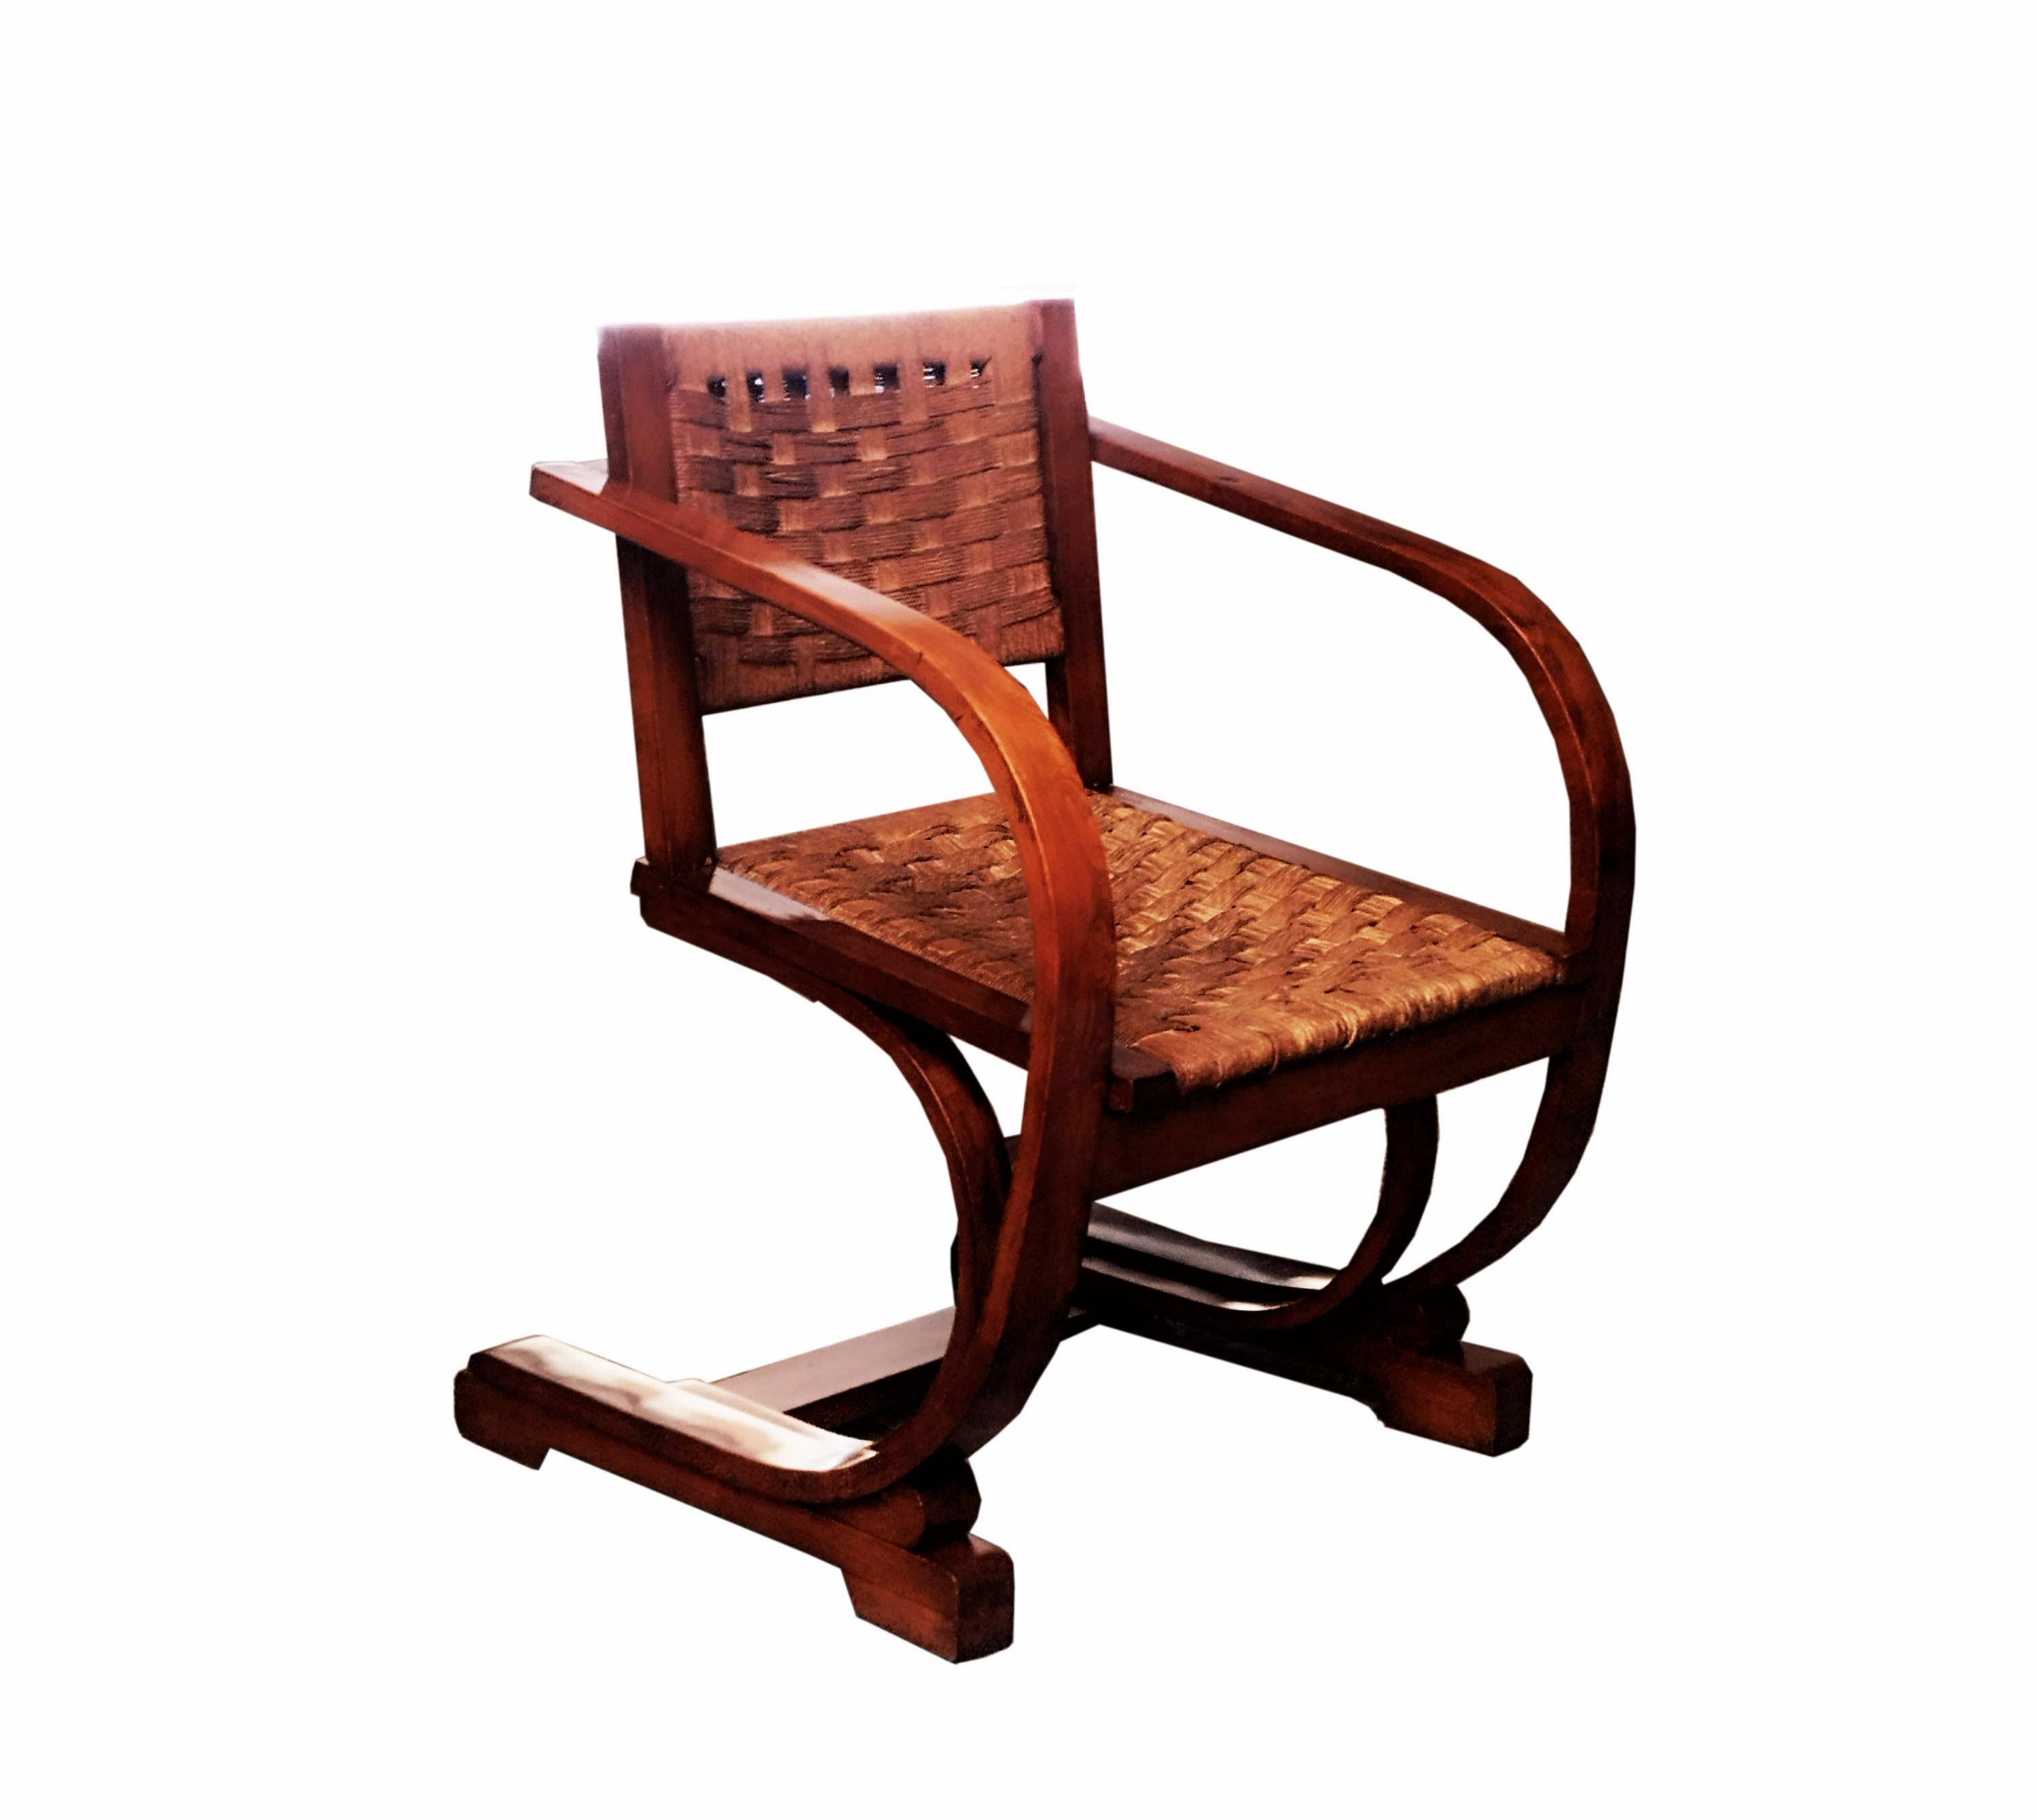 Mid-Century Modern Bas Van Pelt Art Deco Bentwood Lounge Chair, Netherlands 1950s For Sale